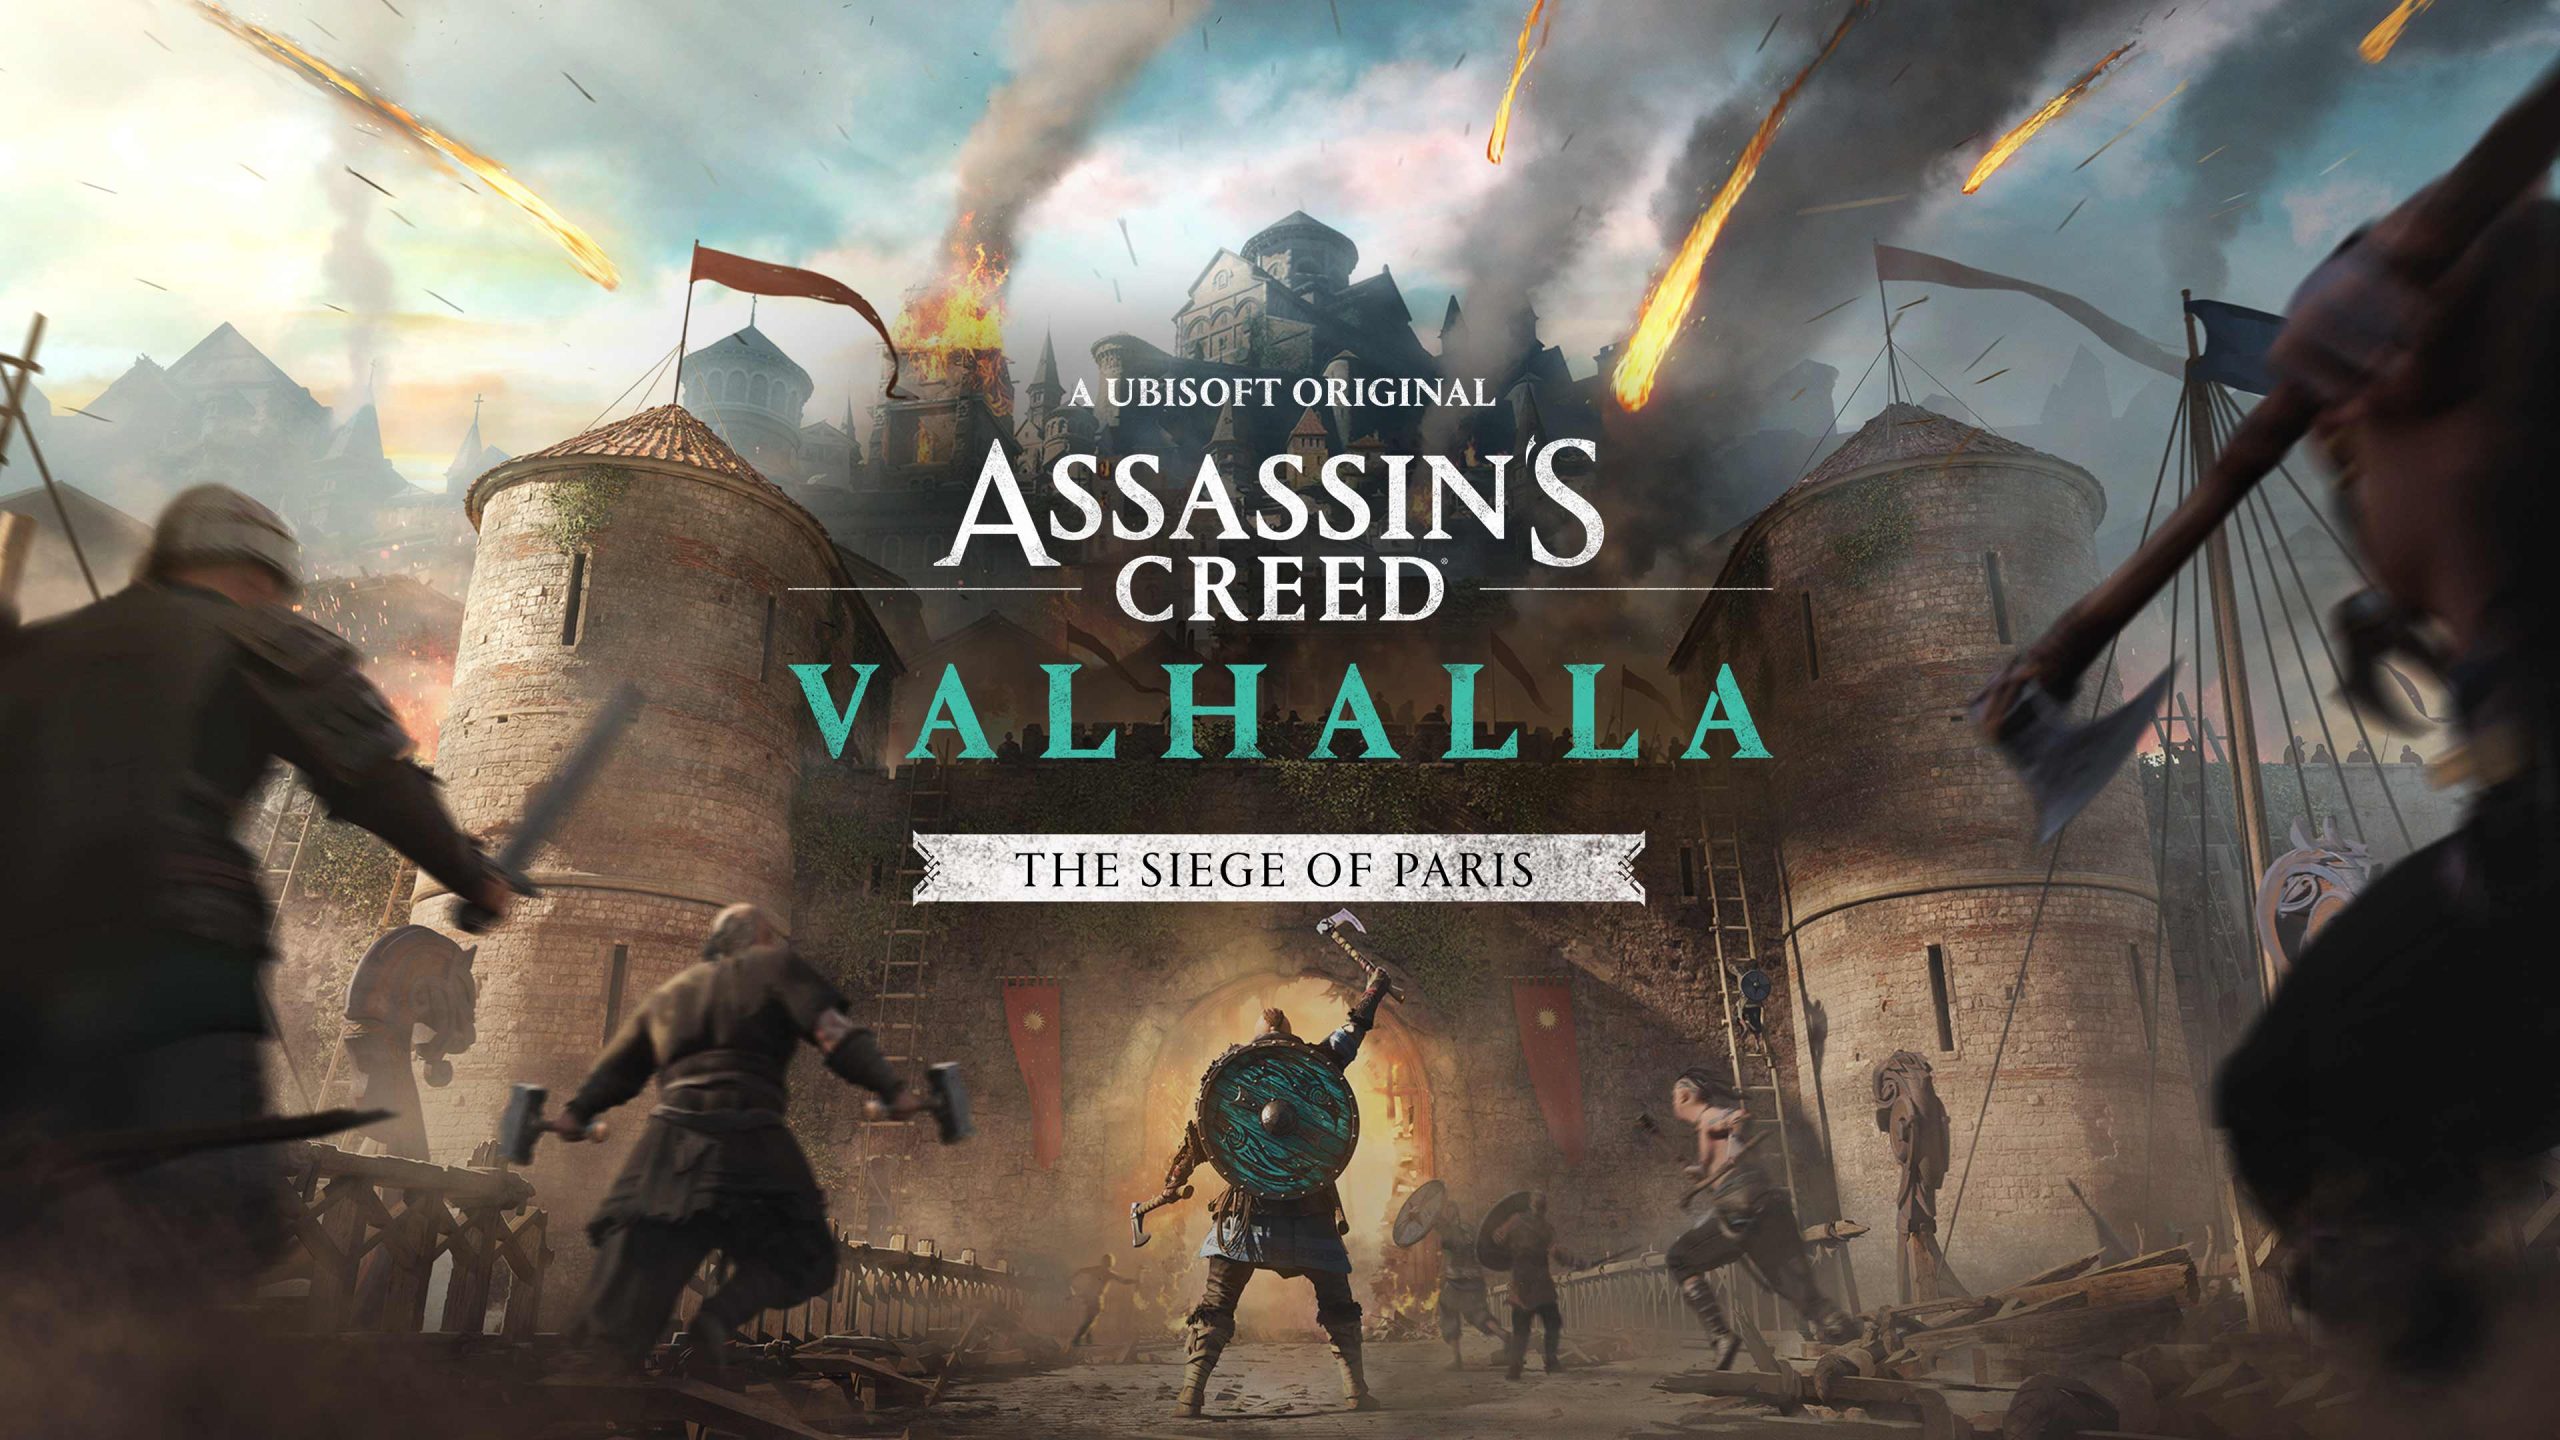 Olcsó párizsi – Assassin’s Creed Valhalla: The Siege of Paris (PC) kritika